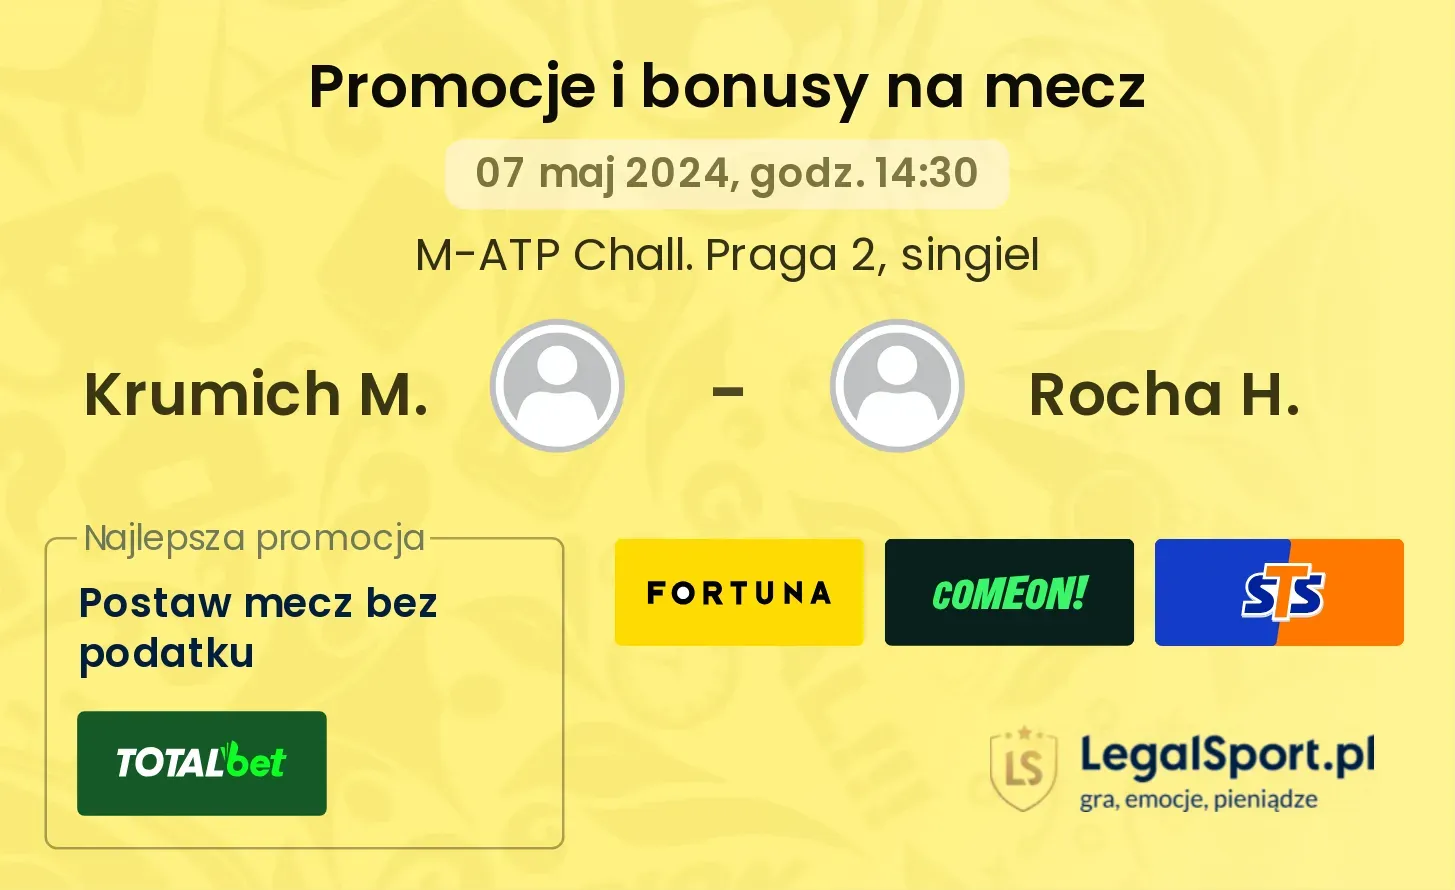 Krumich M. - Rocha H. promocje bonusy na mecz